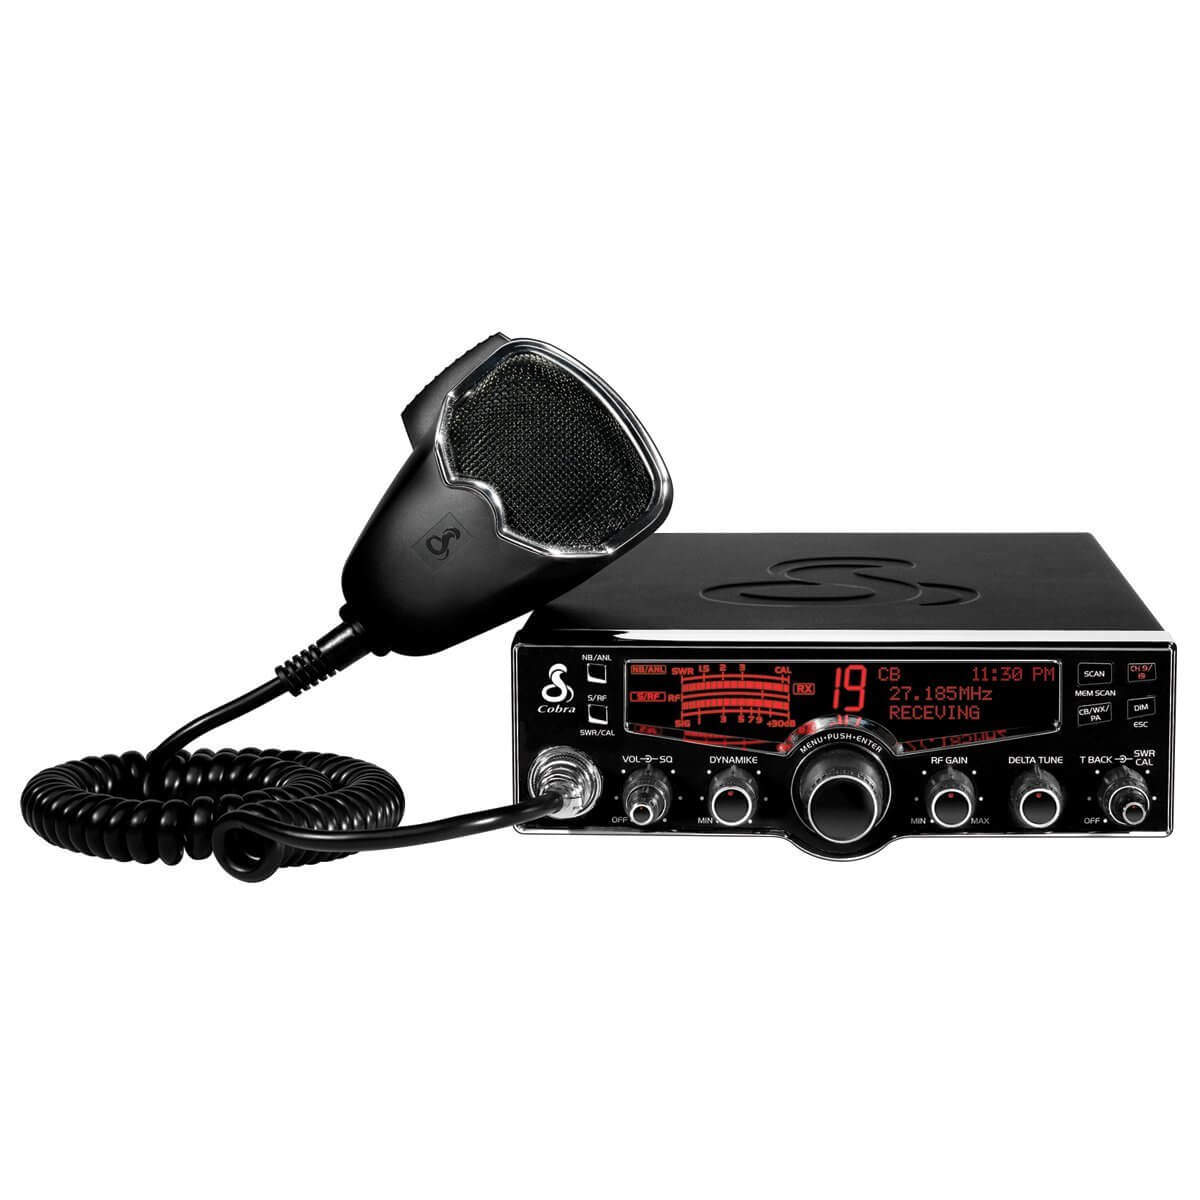 Cobra 29 LX 40-Channel CB Radio 